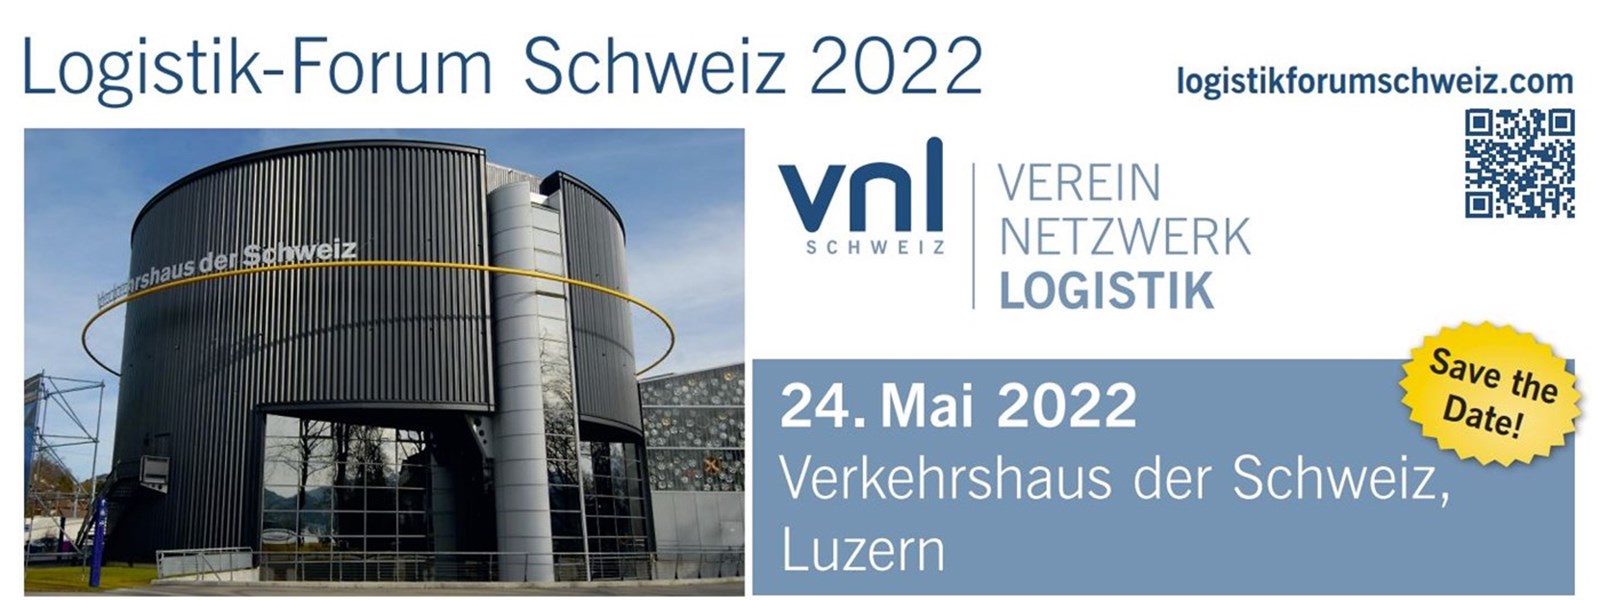 Logistikforum Schweiz 2022